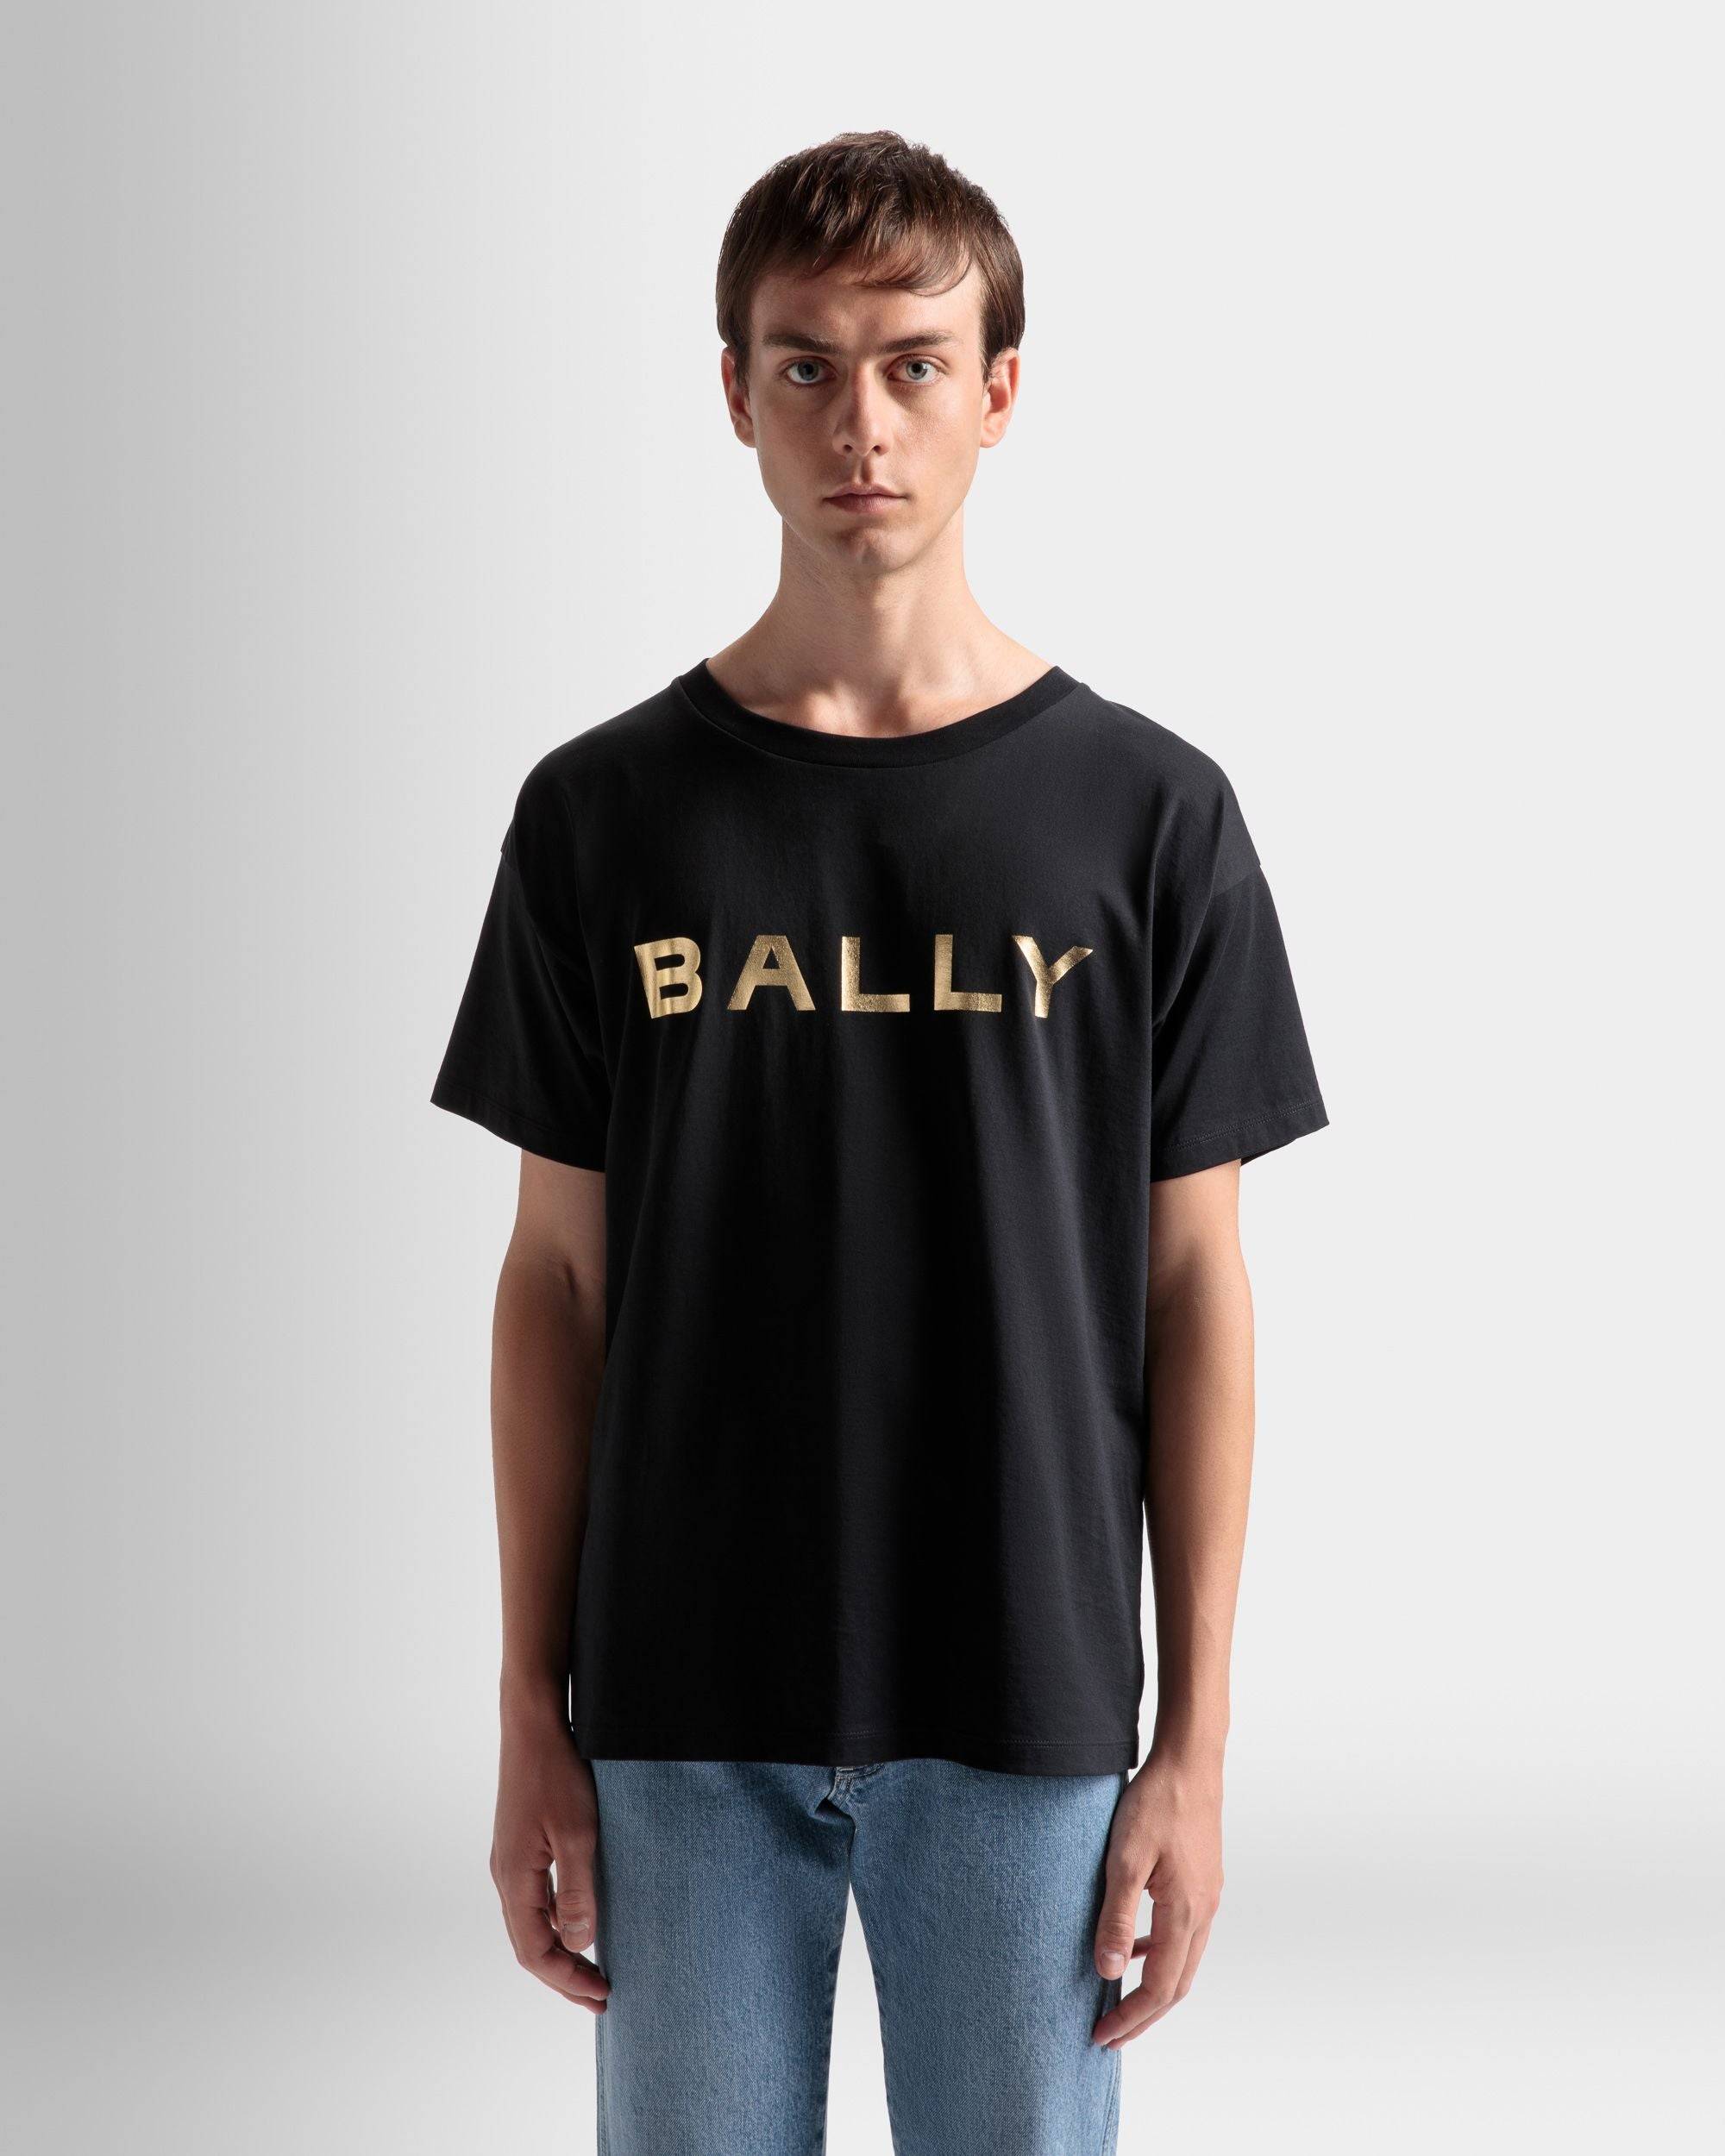 Logo T-Shirt | Men's T-Shirt | Black Cotton | Bally | On Model Close Up